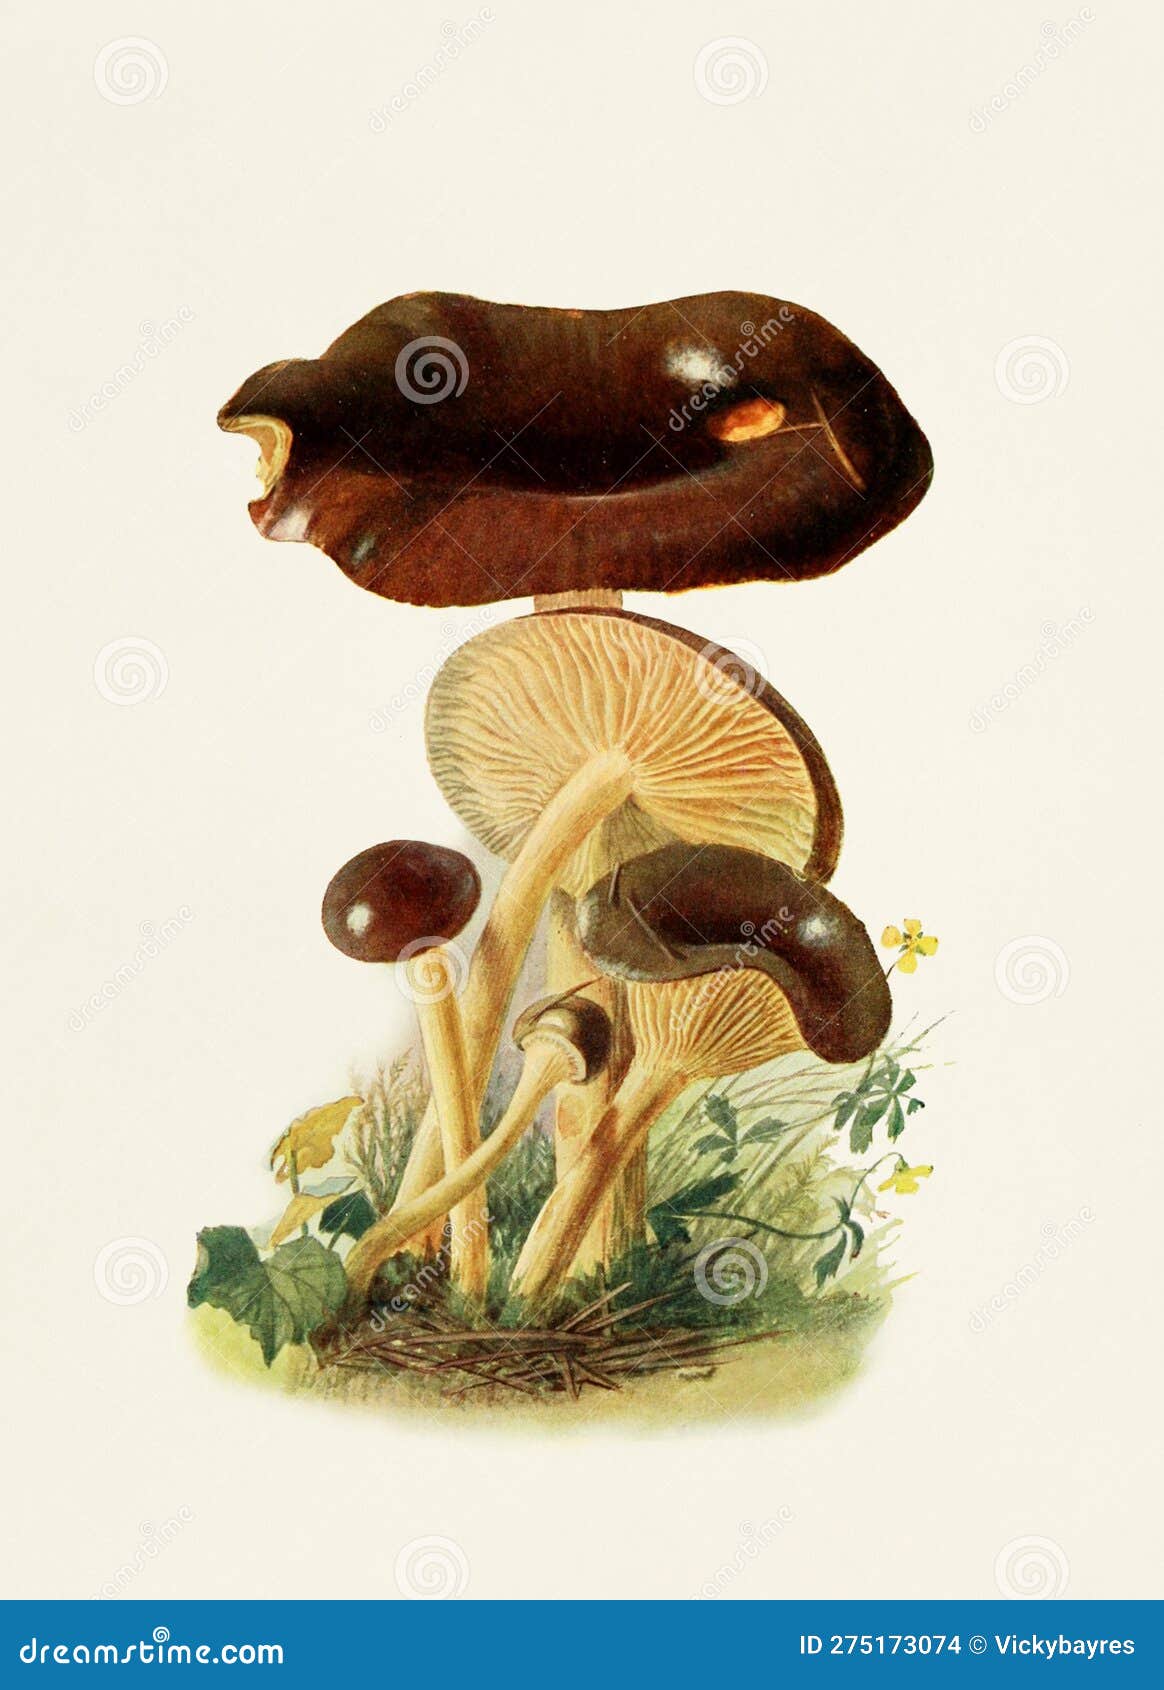 beautiful mushroom . limacium vitellum